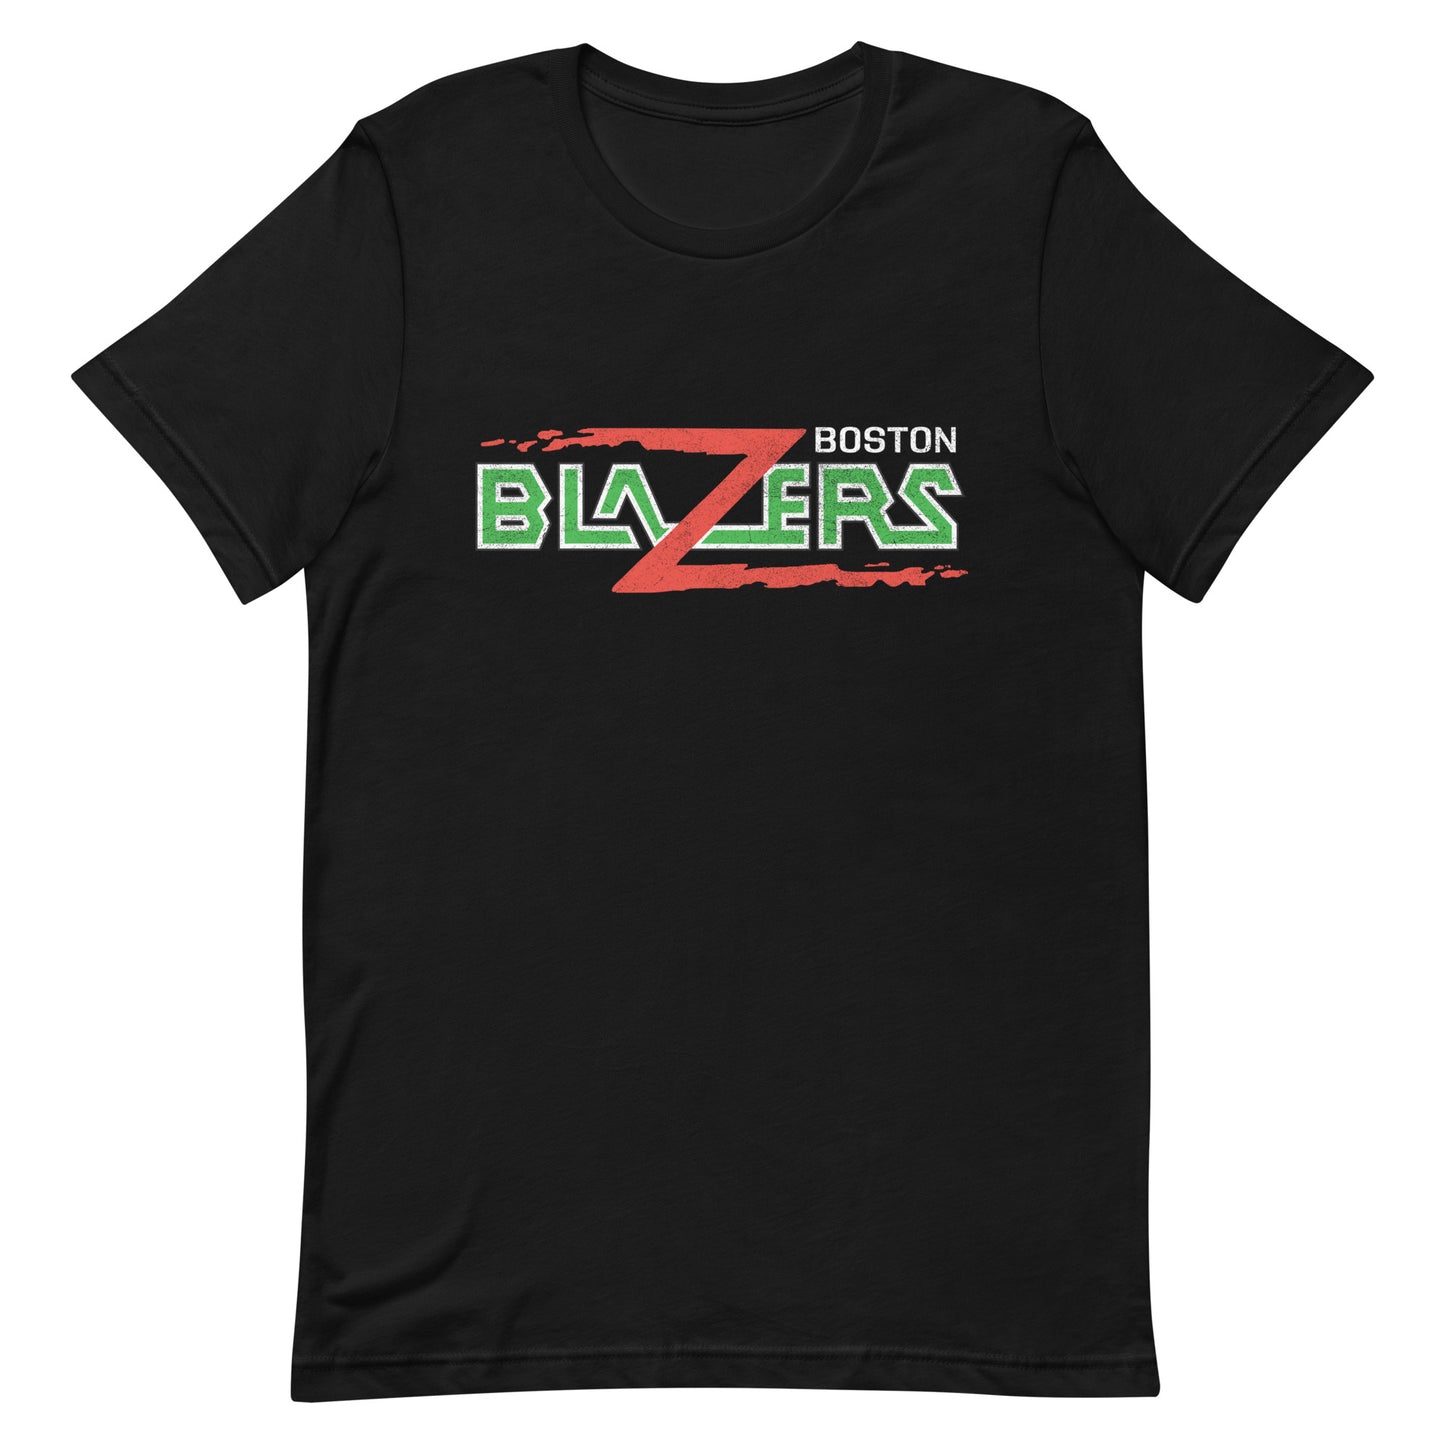 Boston Blazers Retro Major Indoor Lacrosse League Vintage (MILL) Tee